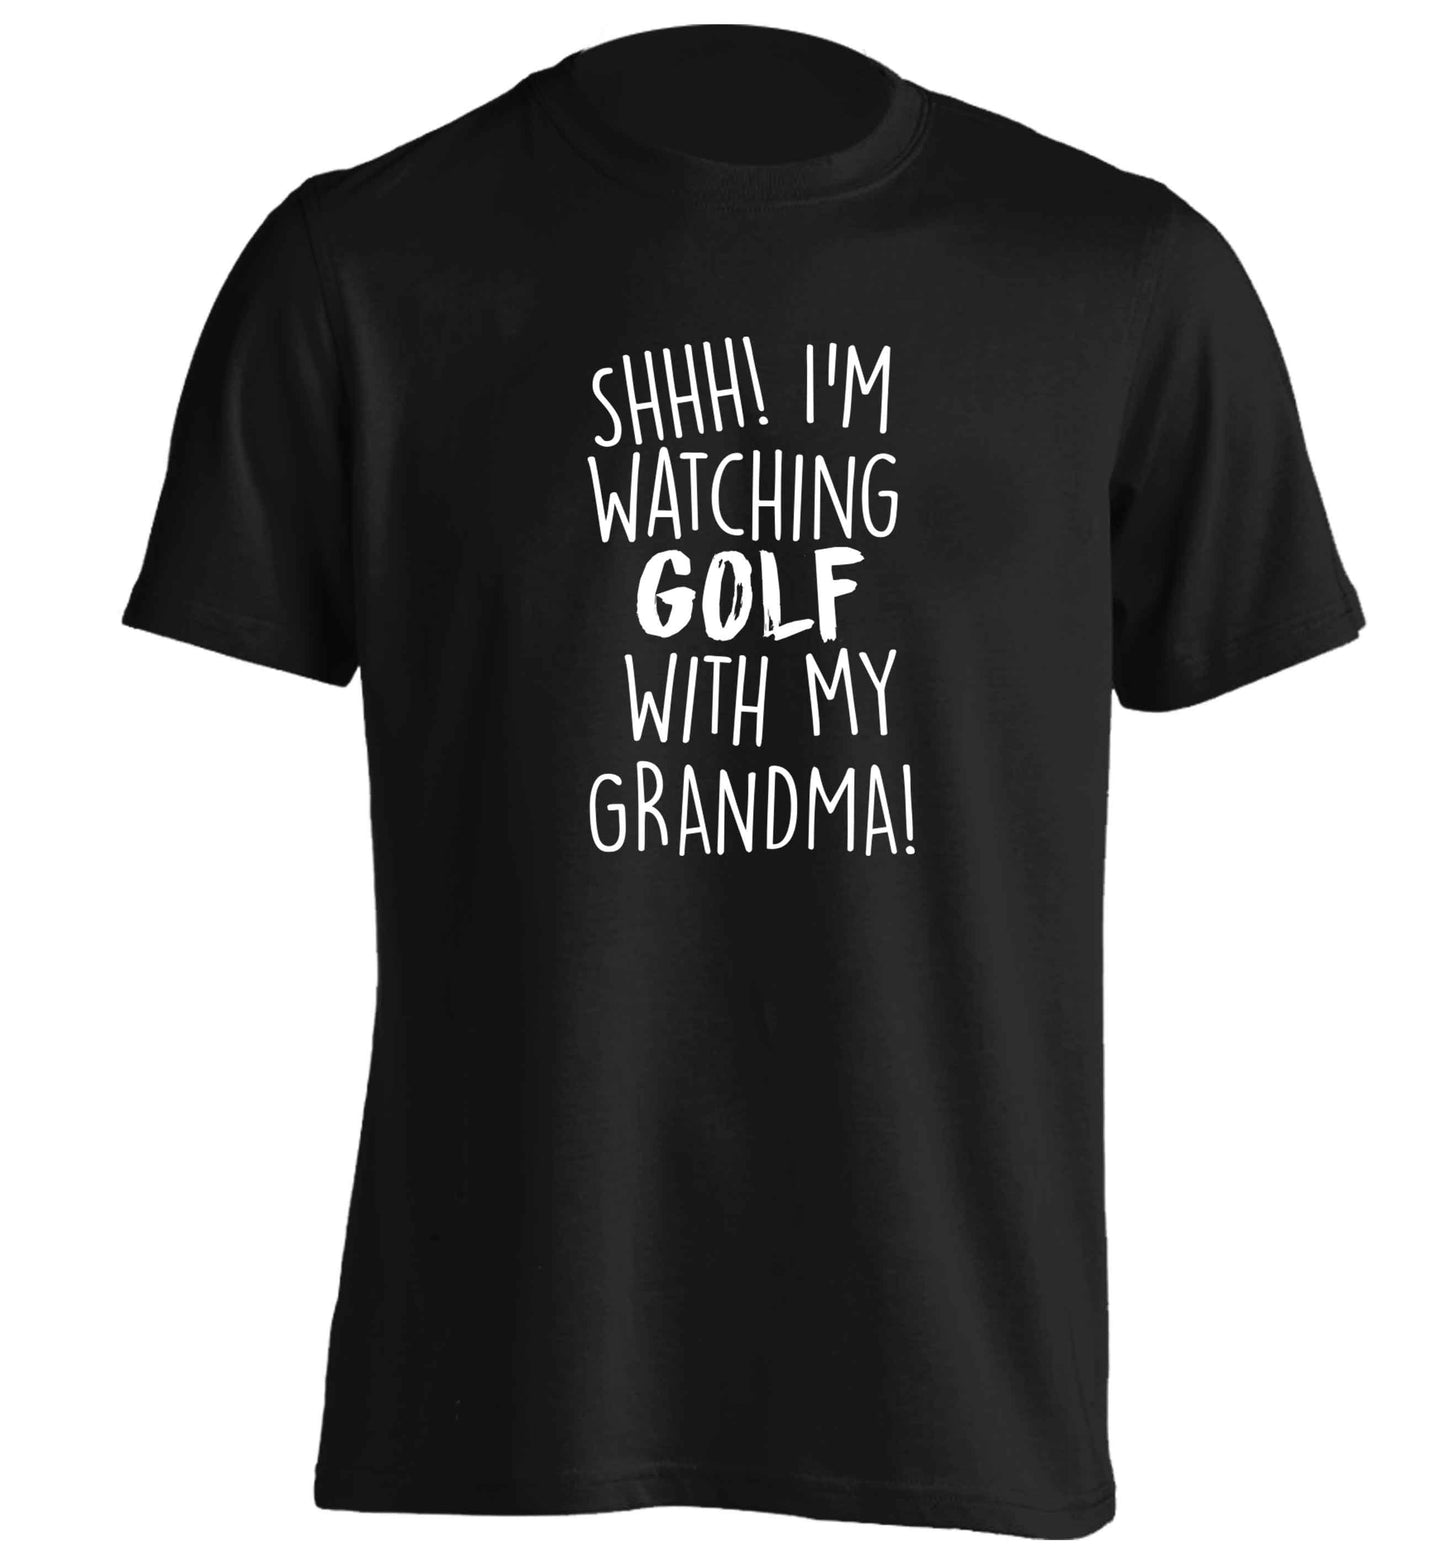 Shh I'm watching golf with my grandma adults unisex black Tshirt 2XL